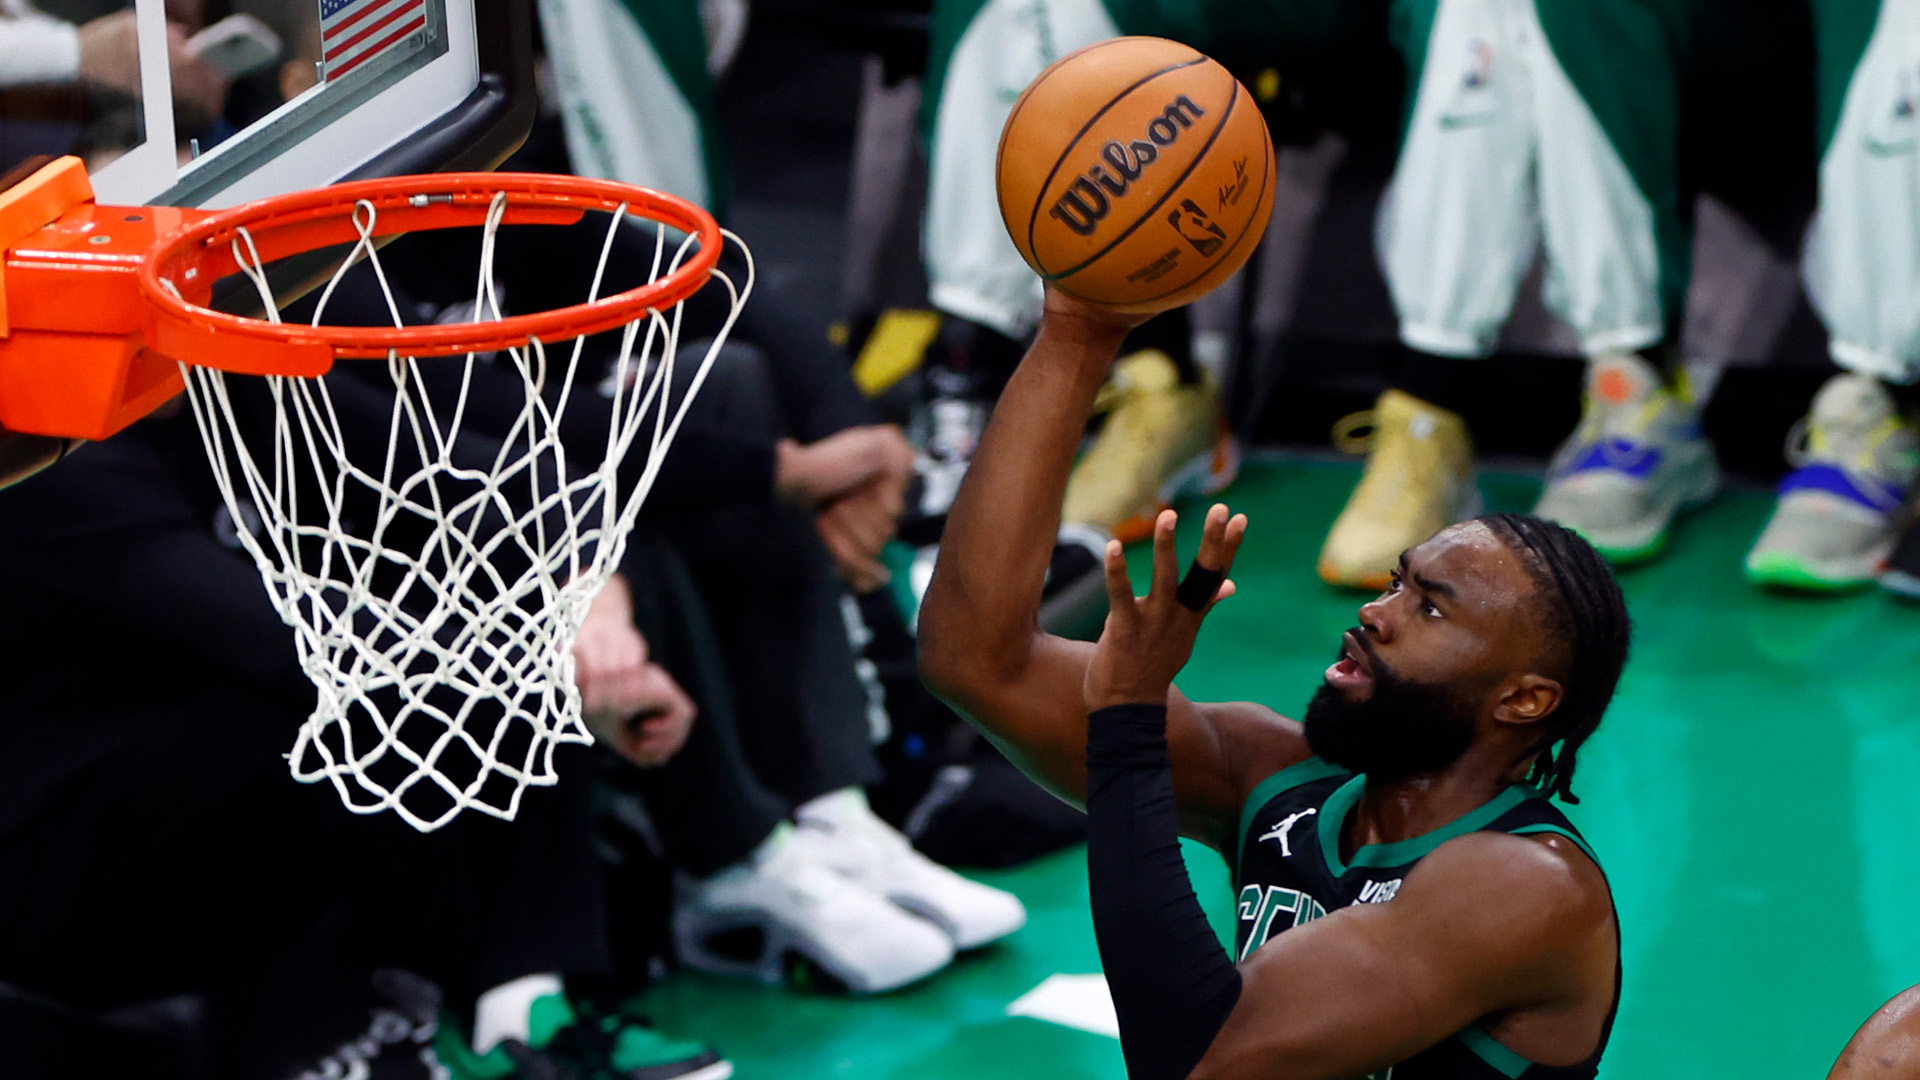 Boston, MA - May 1: Boston Celtics guard Jaylen Brown drives to the basket in the first quarter. (Photo by Danielle Parhizkaran/The Boston Globe via Getty Images)